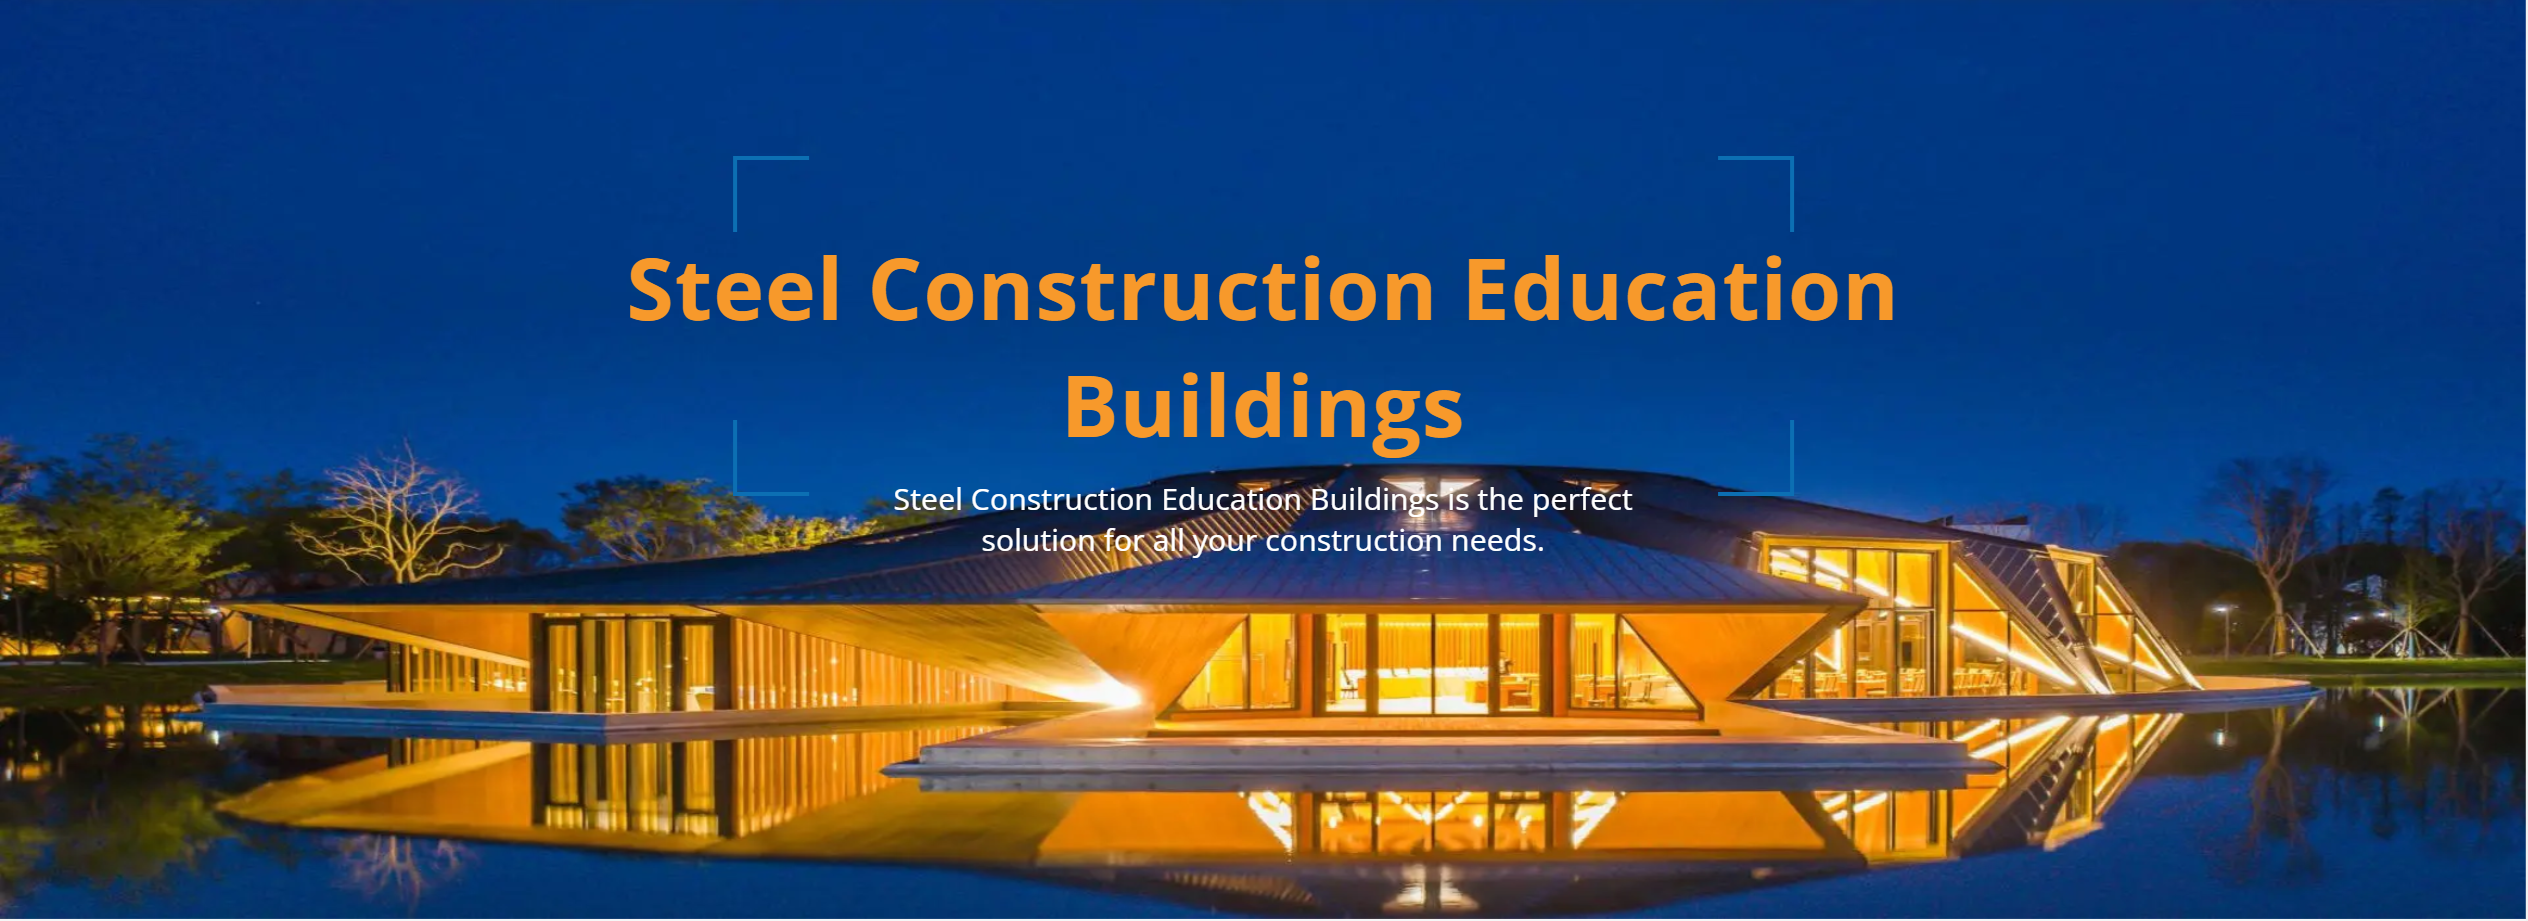 STEEL Construction Education Buildings